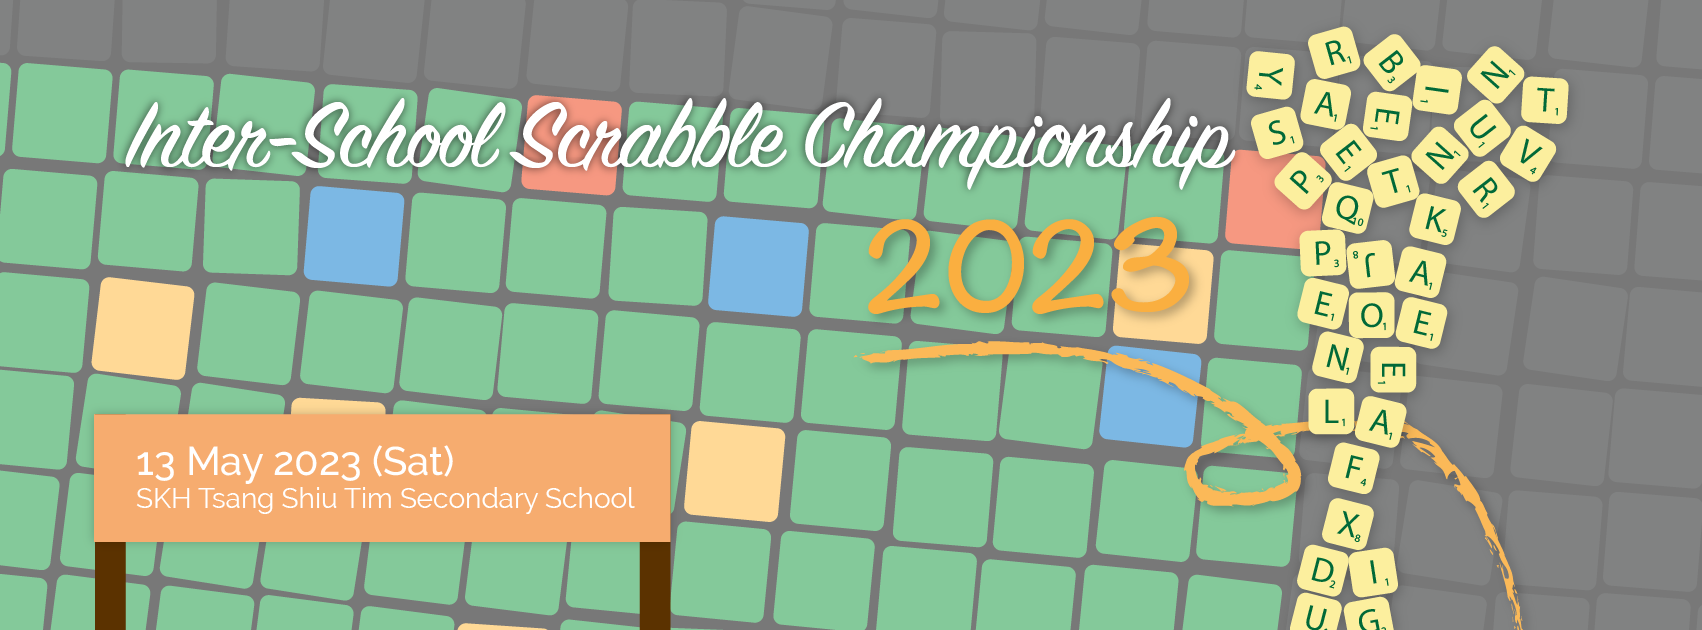 Inter-School Scrabble Championship 2023